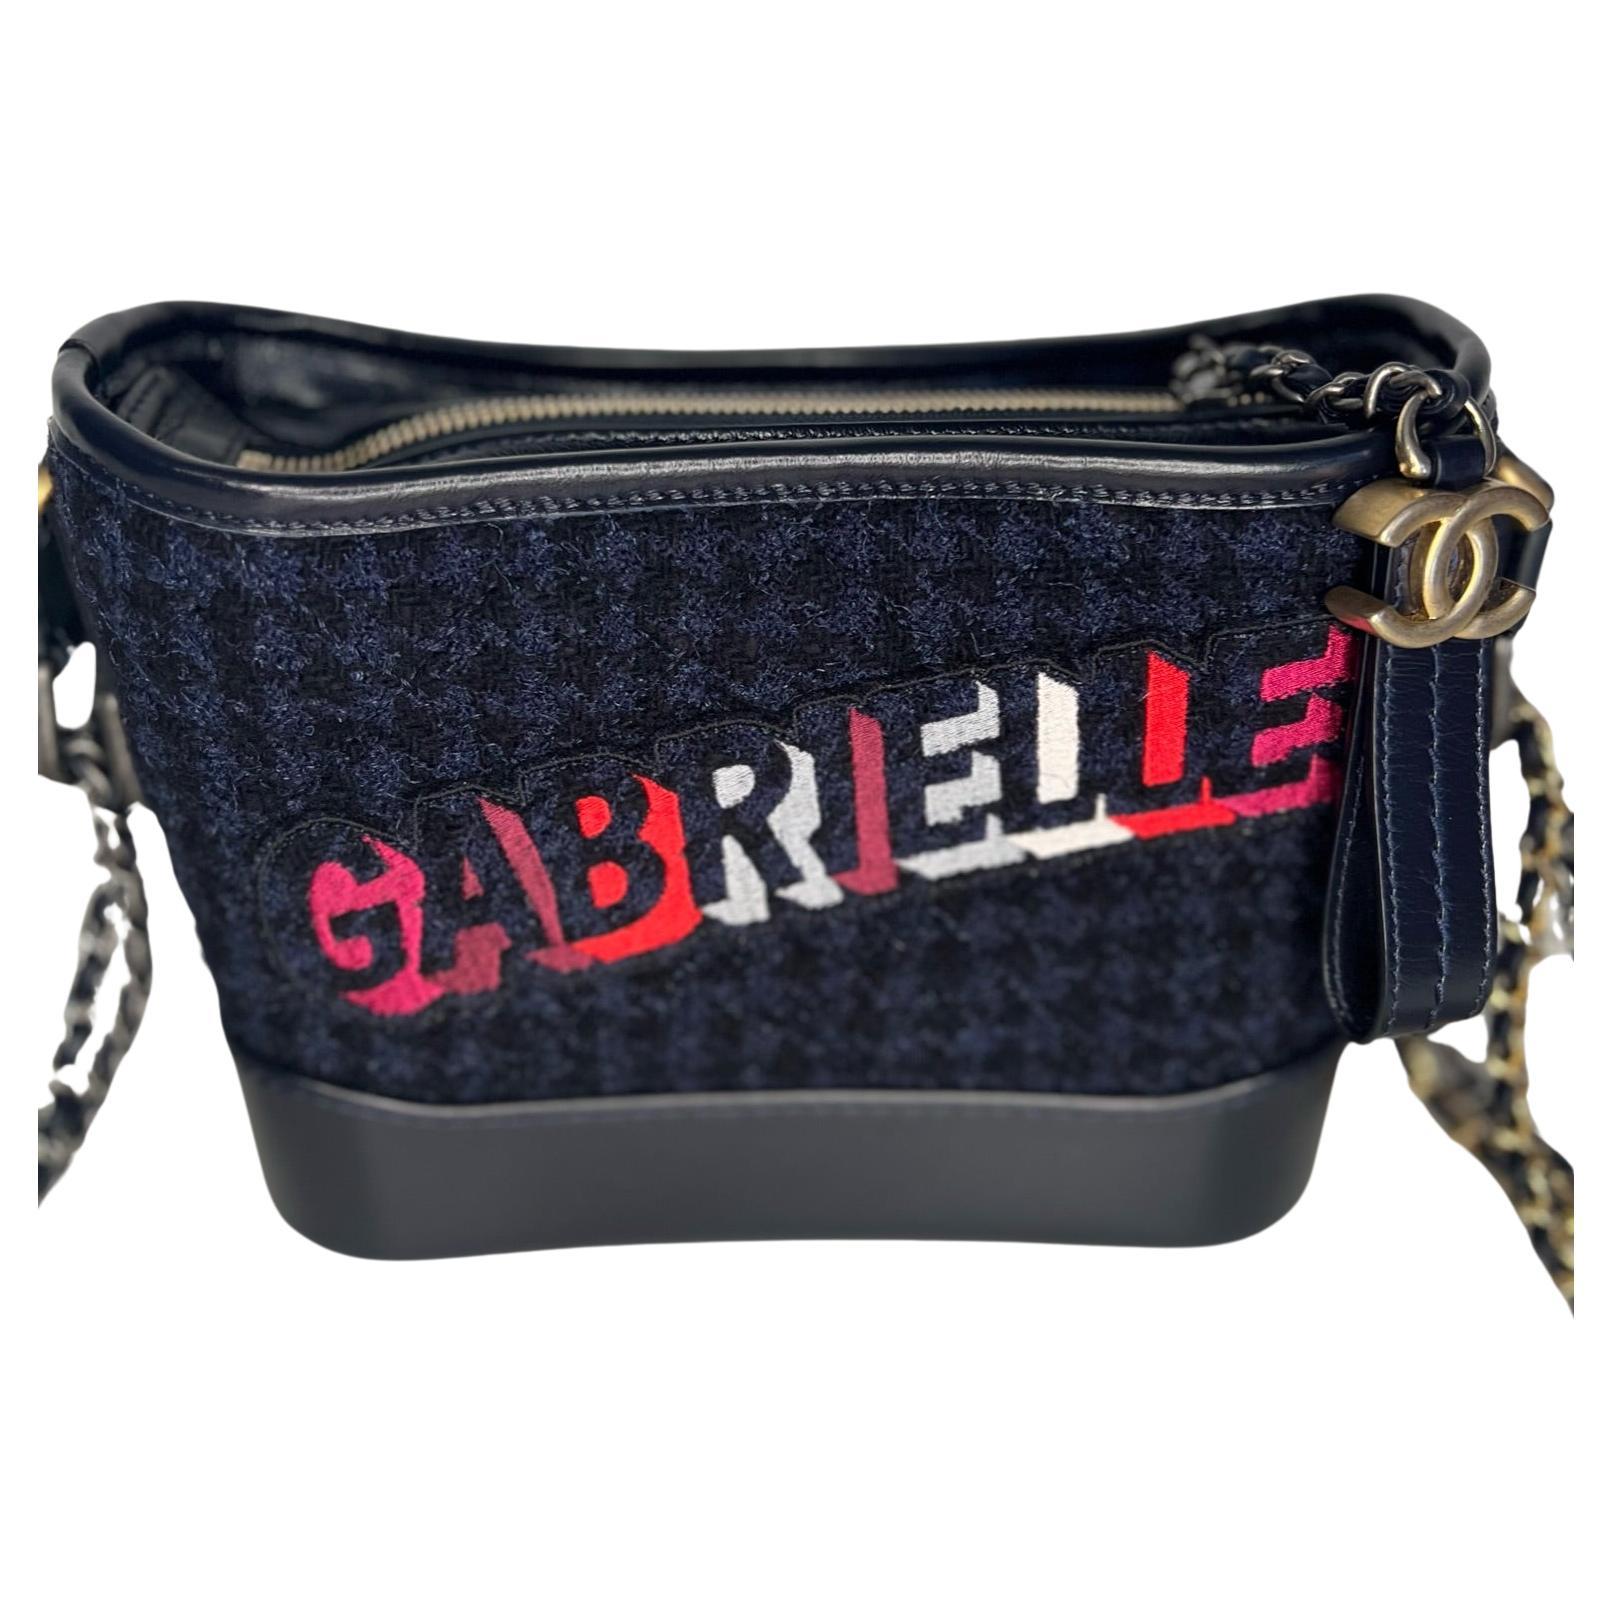 CHANEL'S GABRIELLE SMALL HOBO BAG